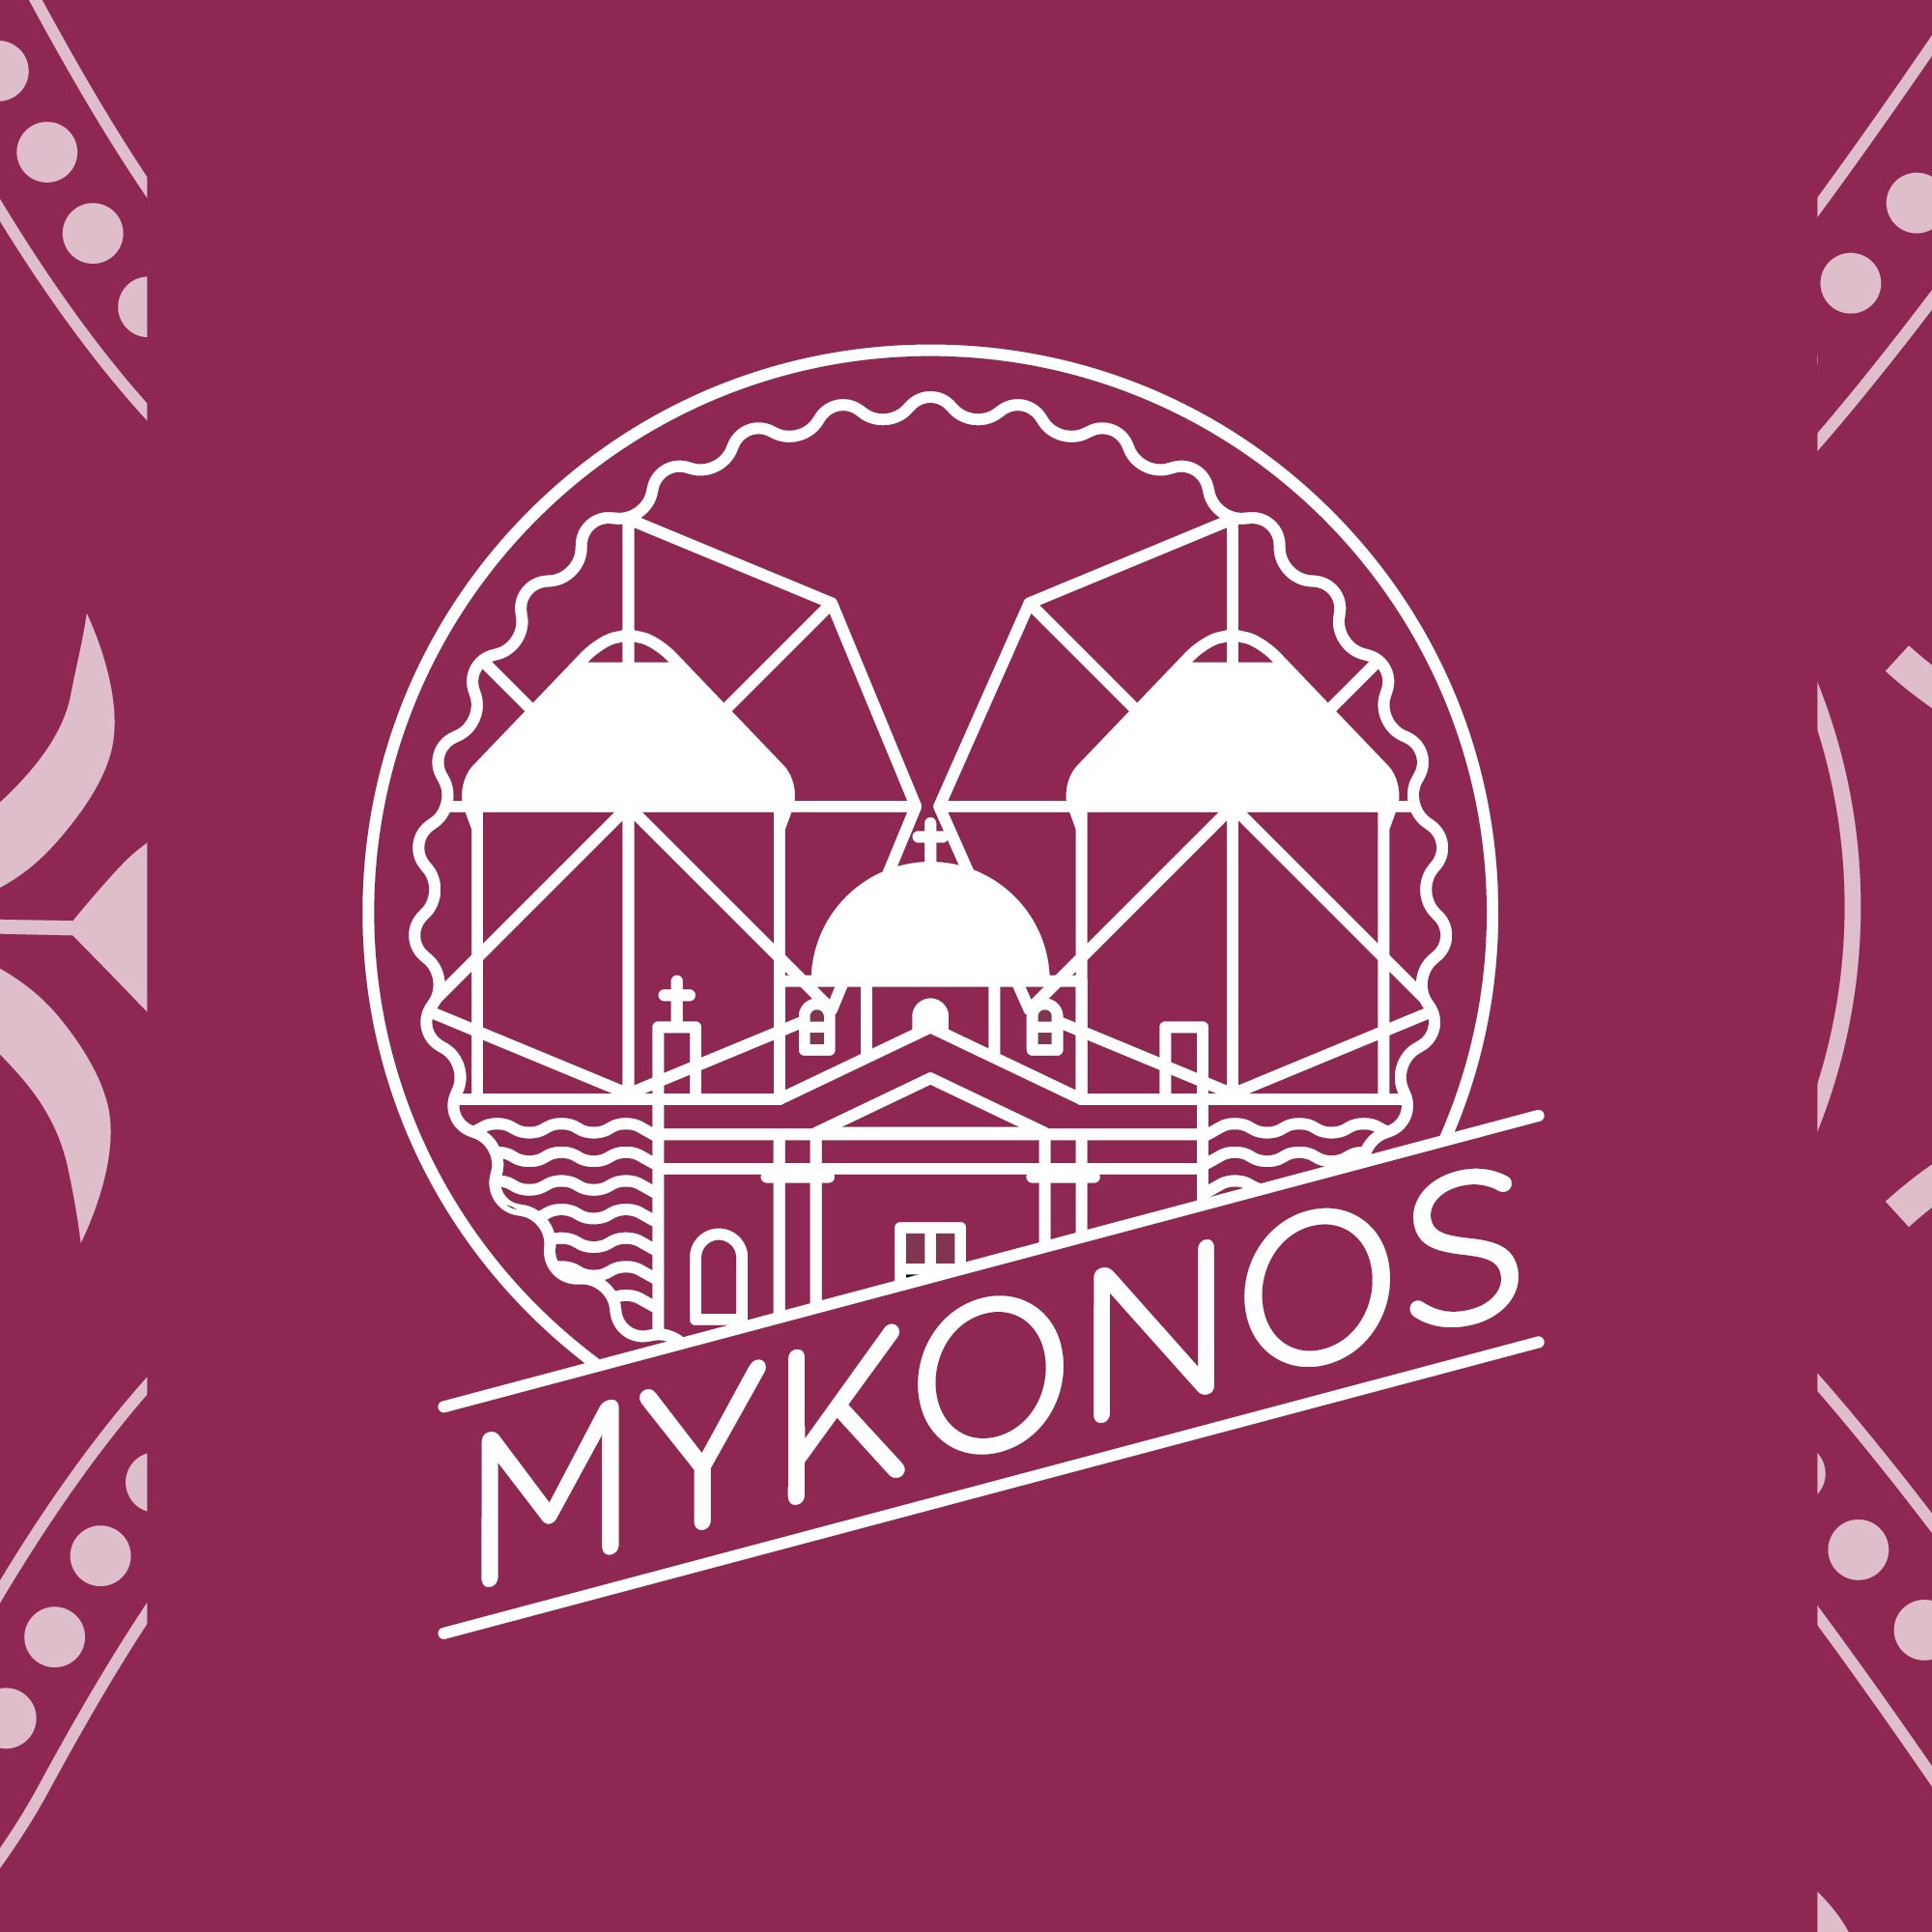 Mykonos - Varriale Profumi®